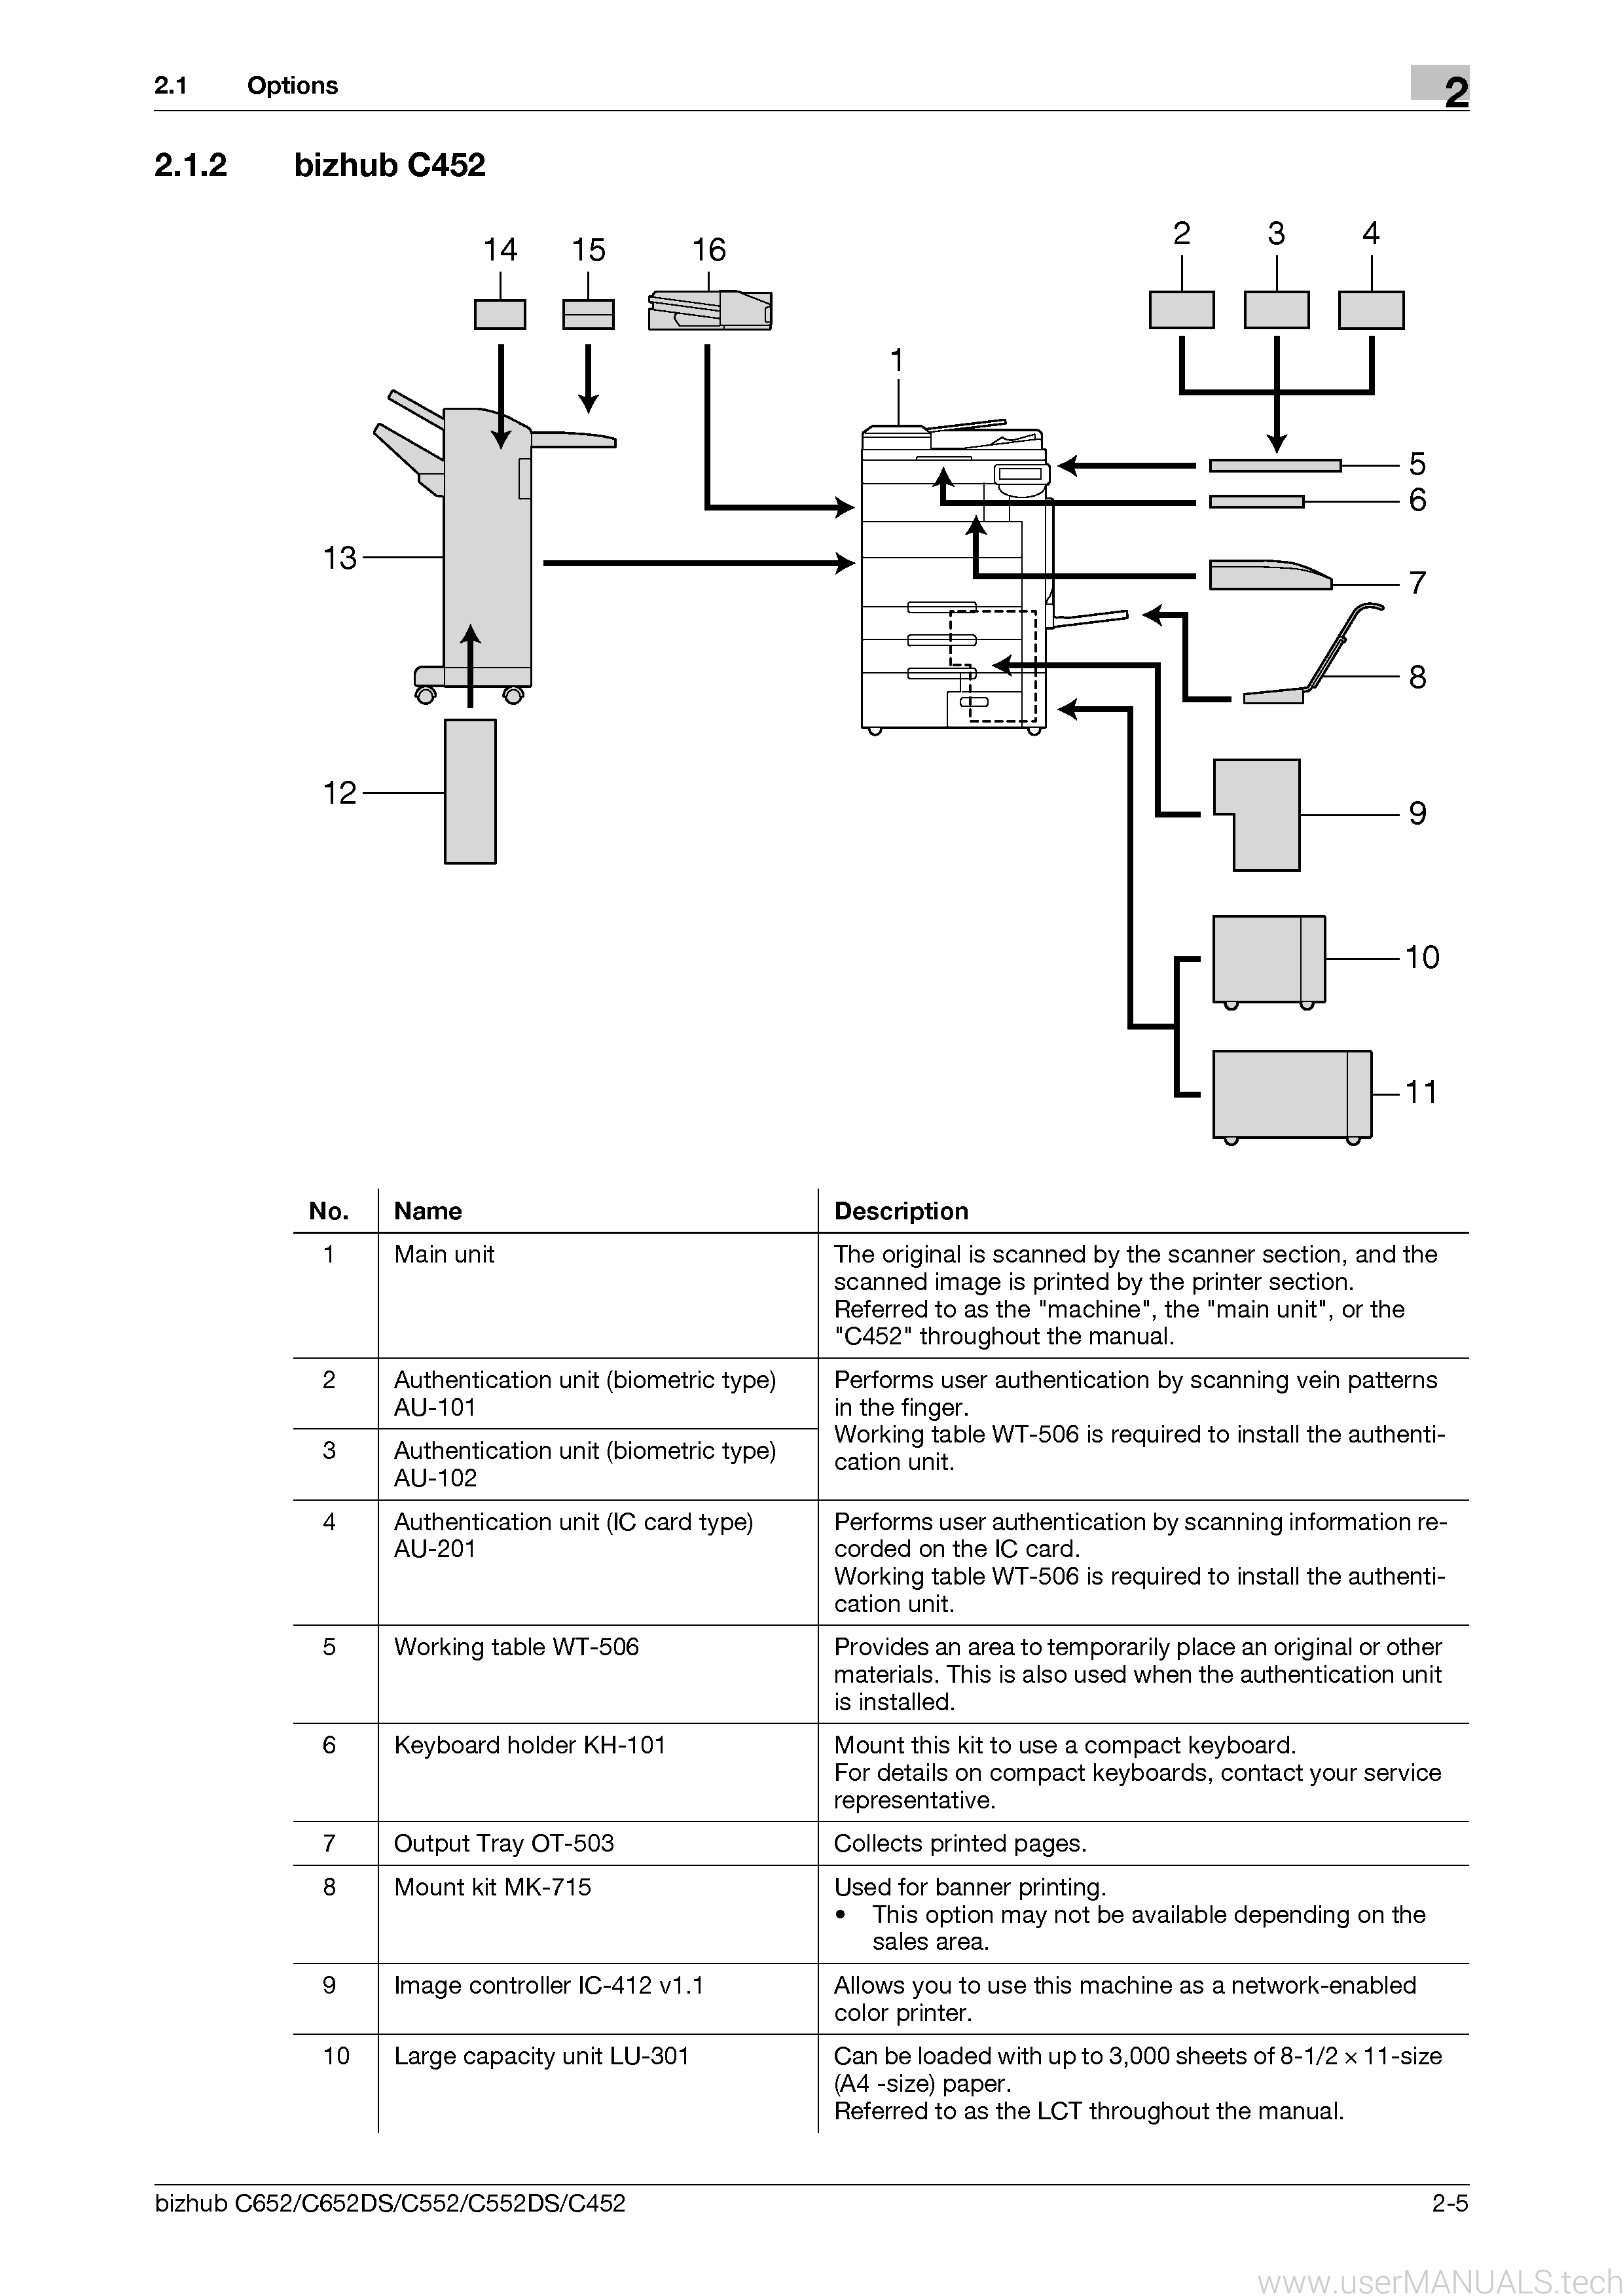 bizhub c452 service manual pdf